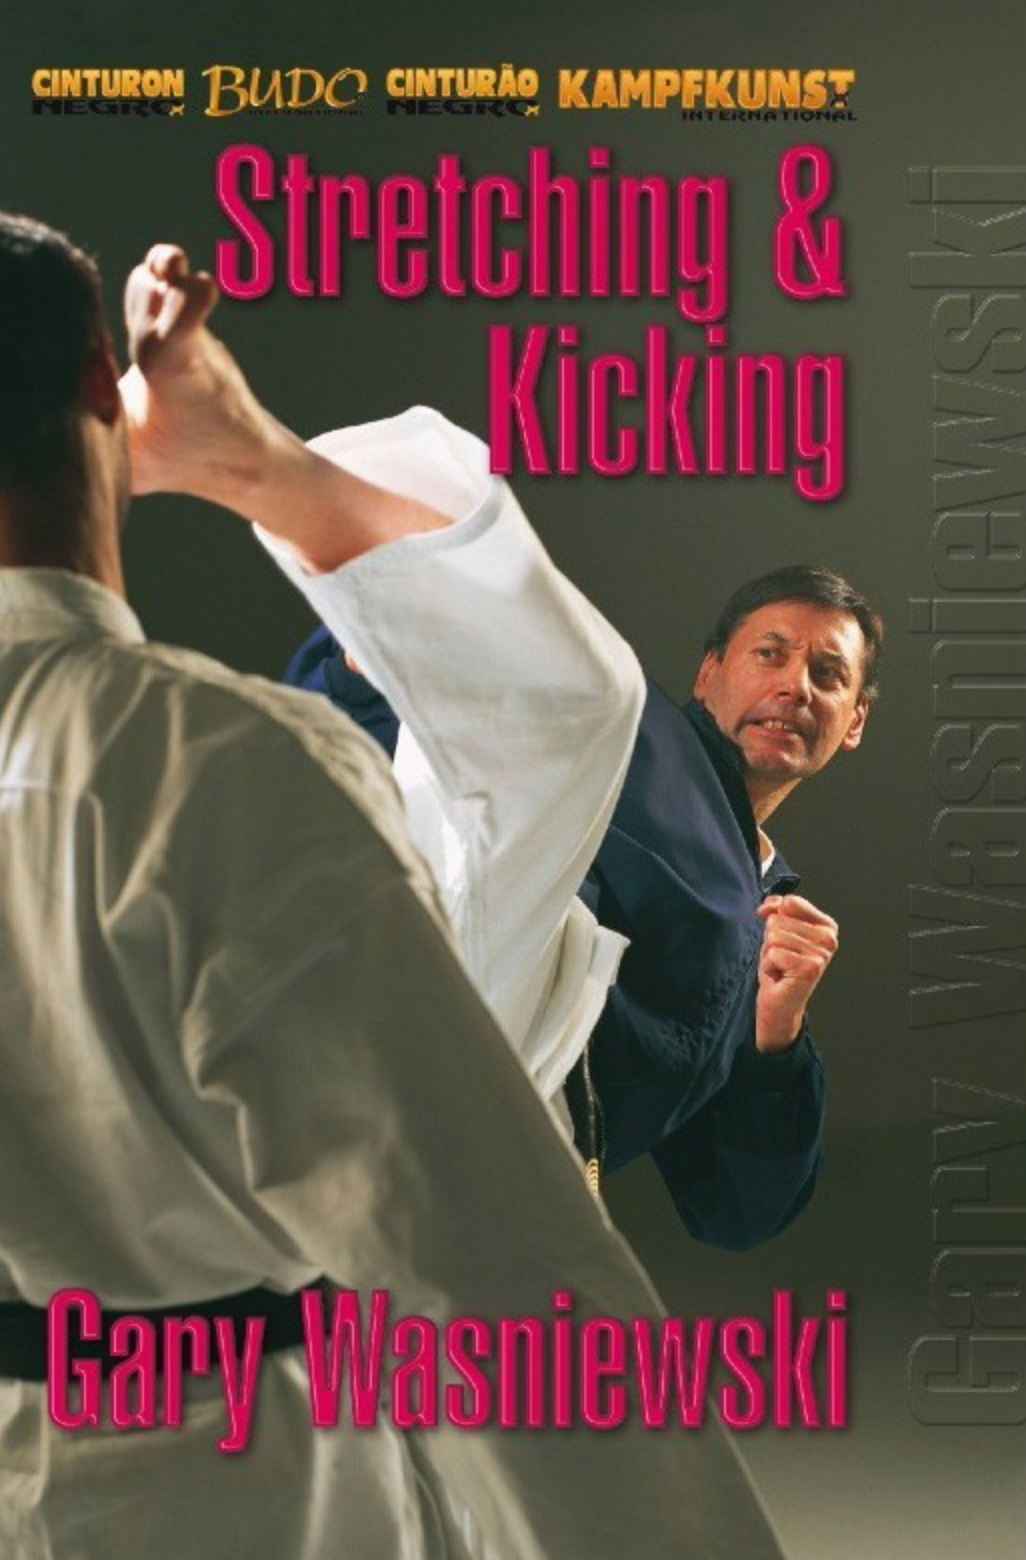 TY-GA Karate Stretching & Kicking DVD with Gary Wasniewsky - Budovideos Inc